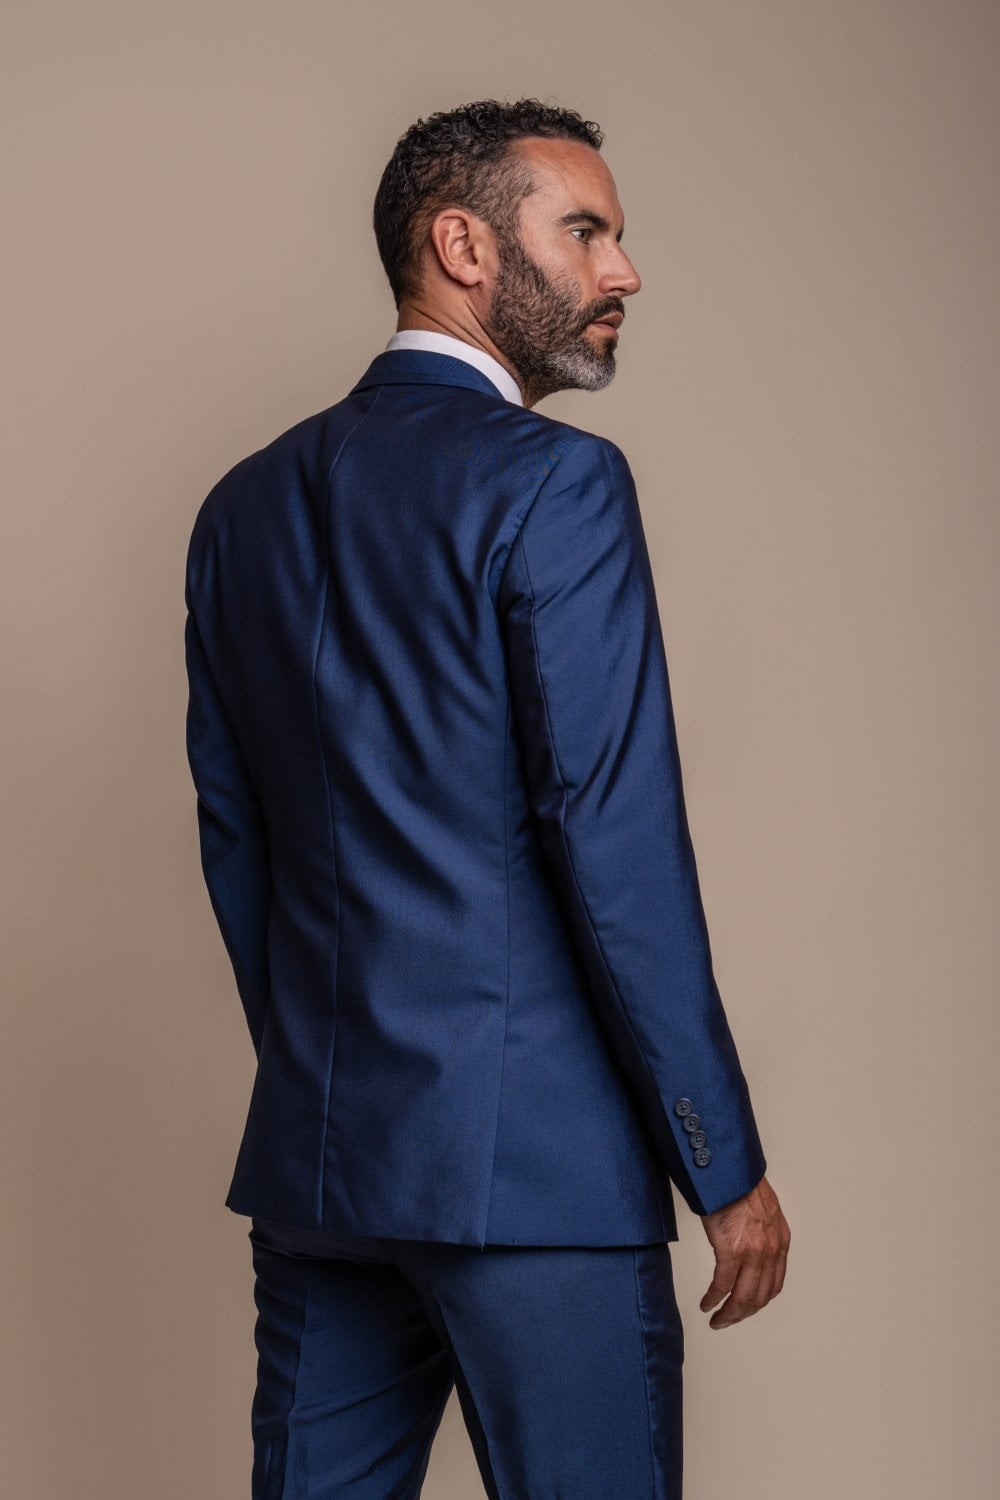 Men's Slim Fit Combined Suit - Ford / Reegan